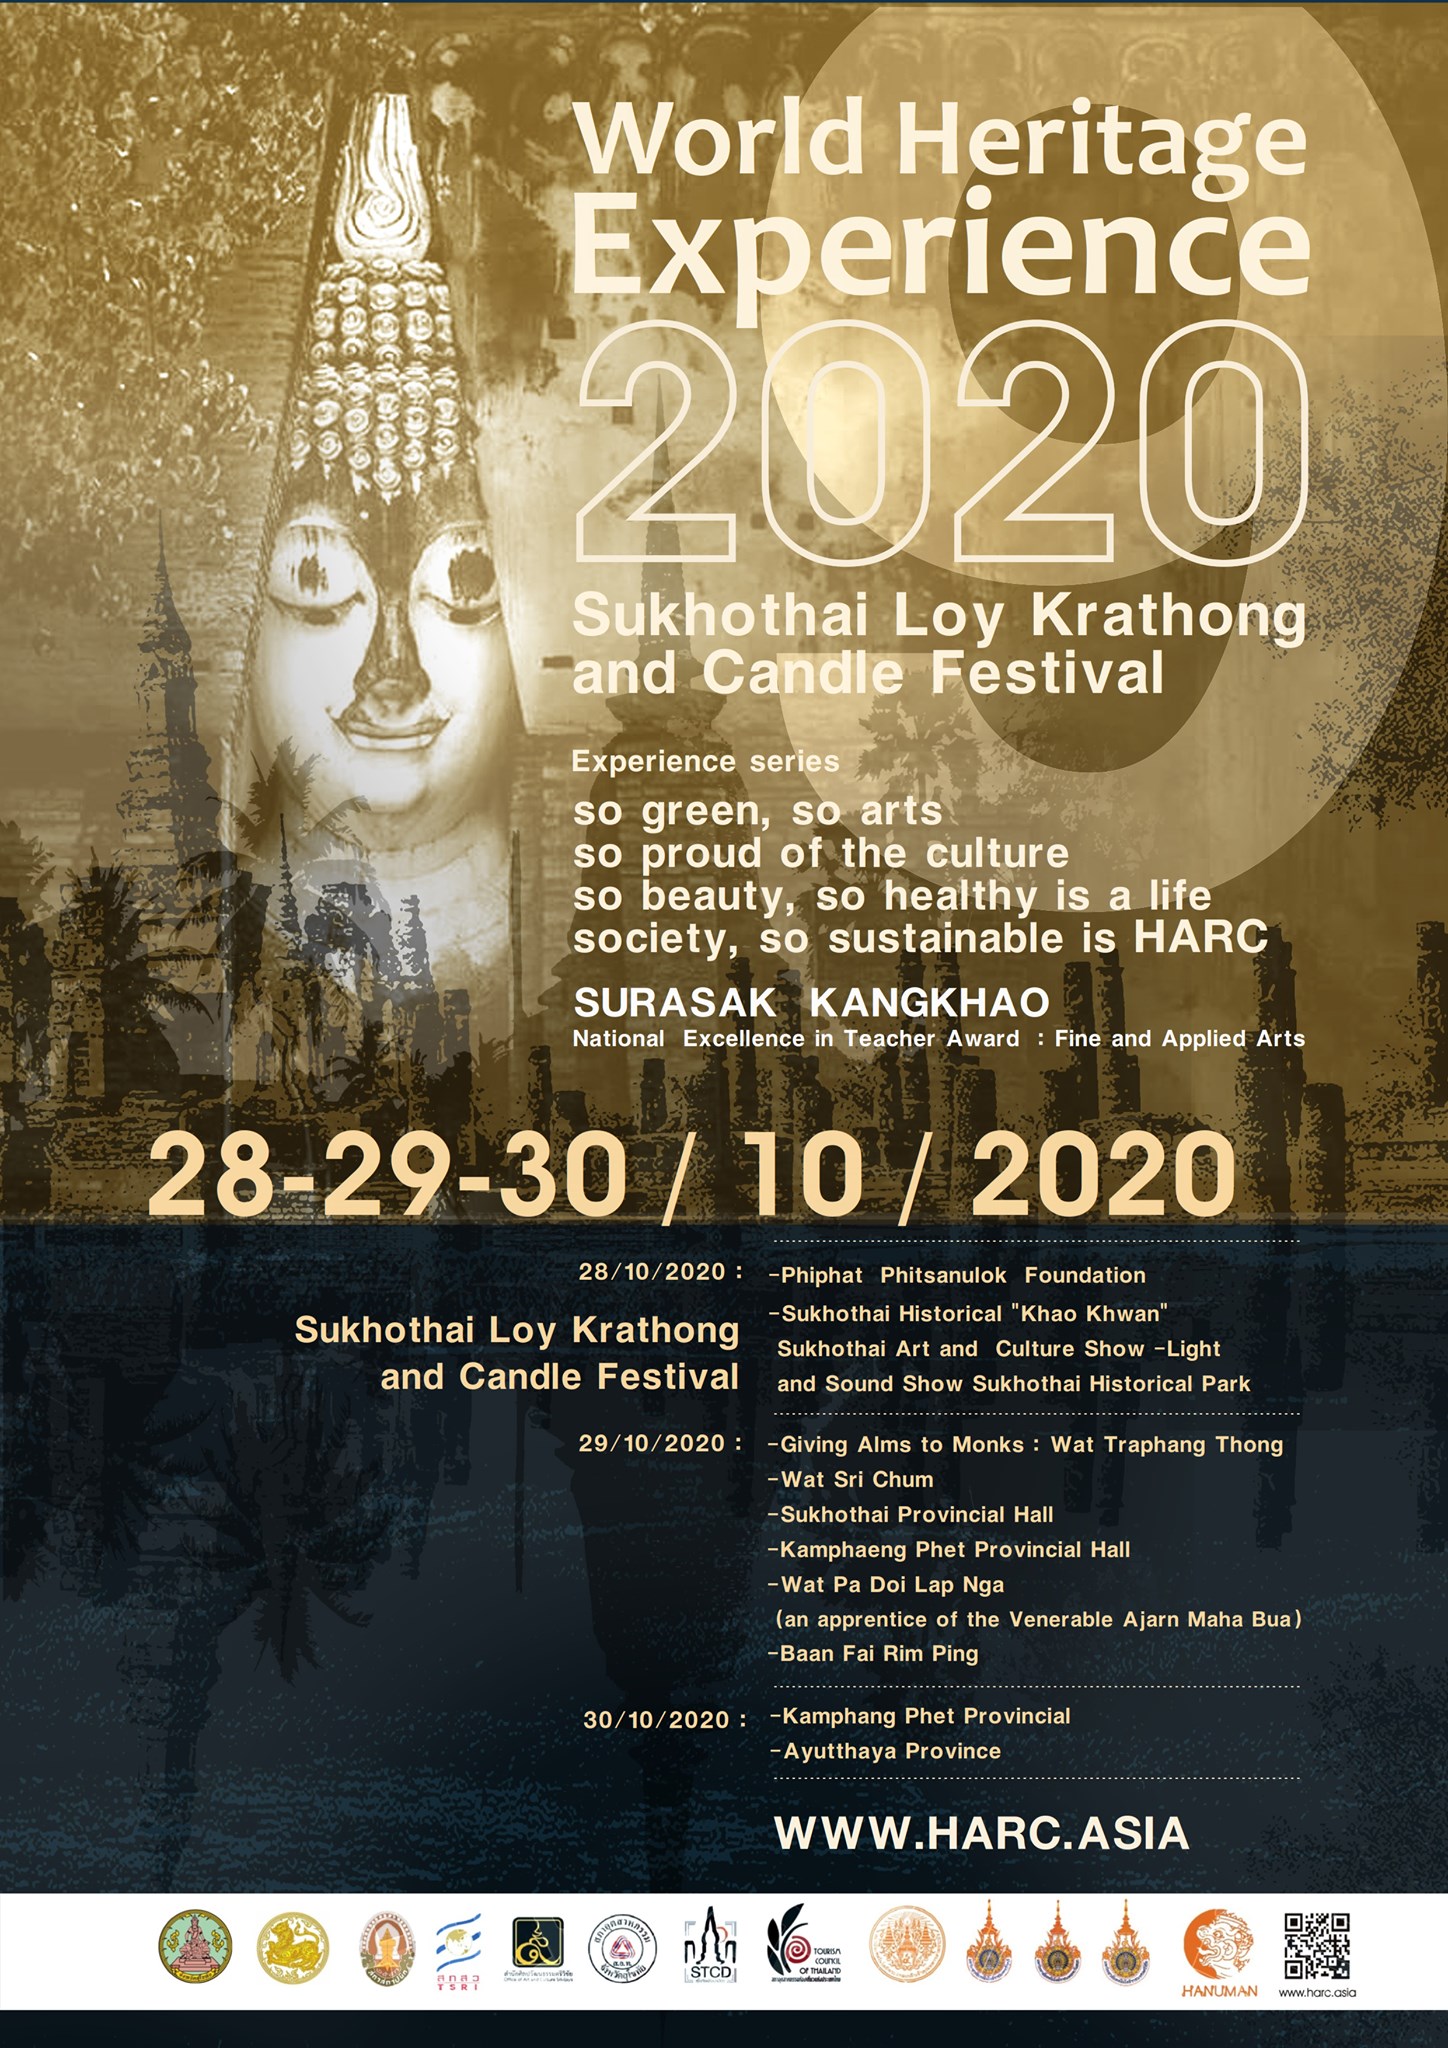 World Heritage Experience 2020. Sukhothai Loy Krathong and candle festival